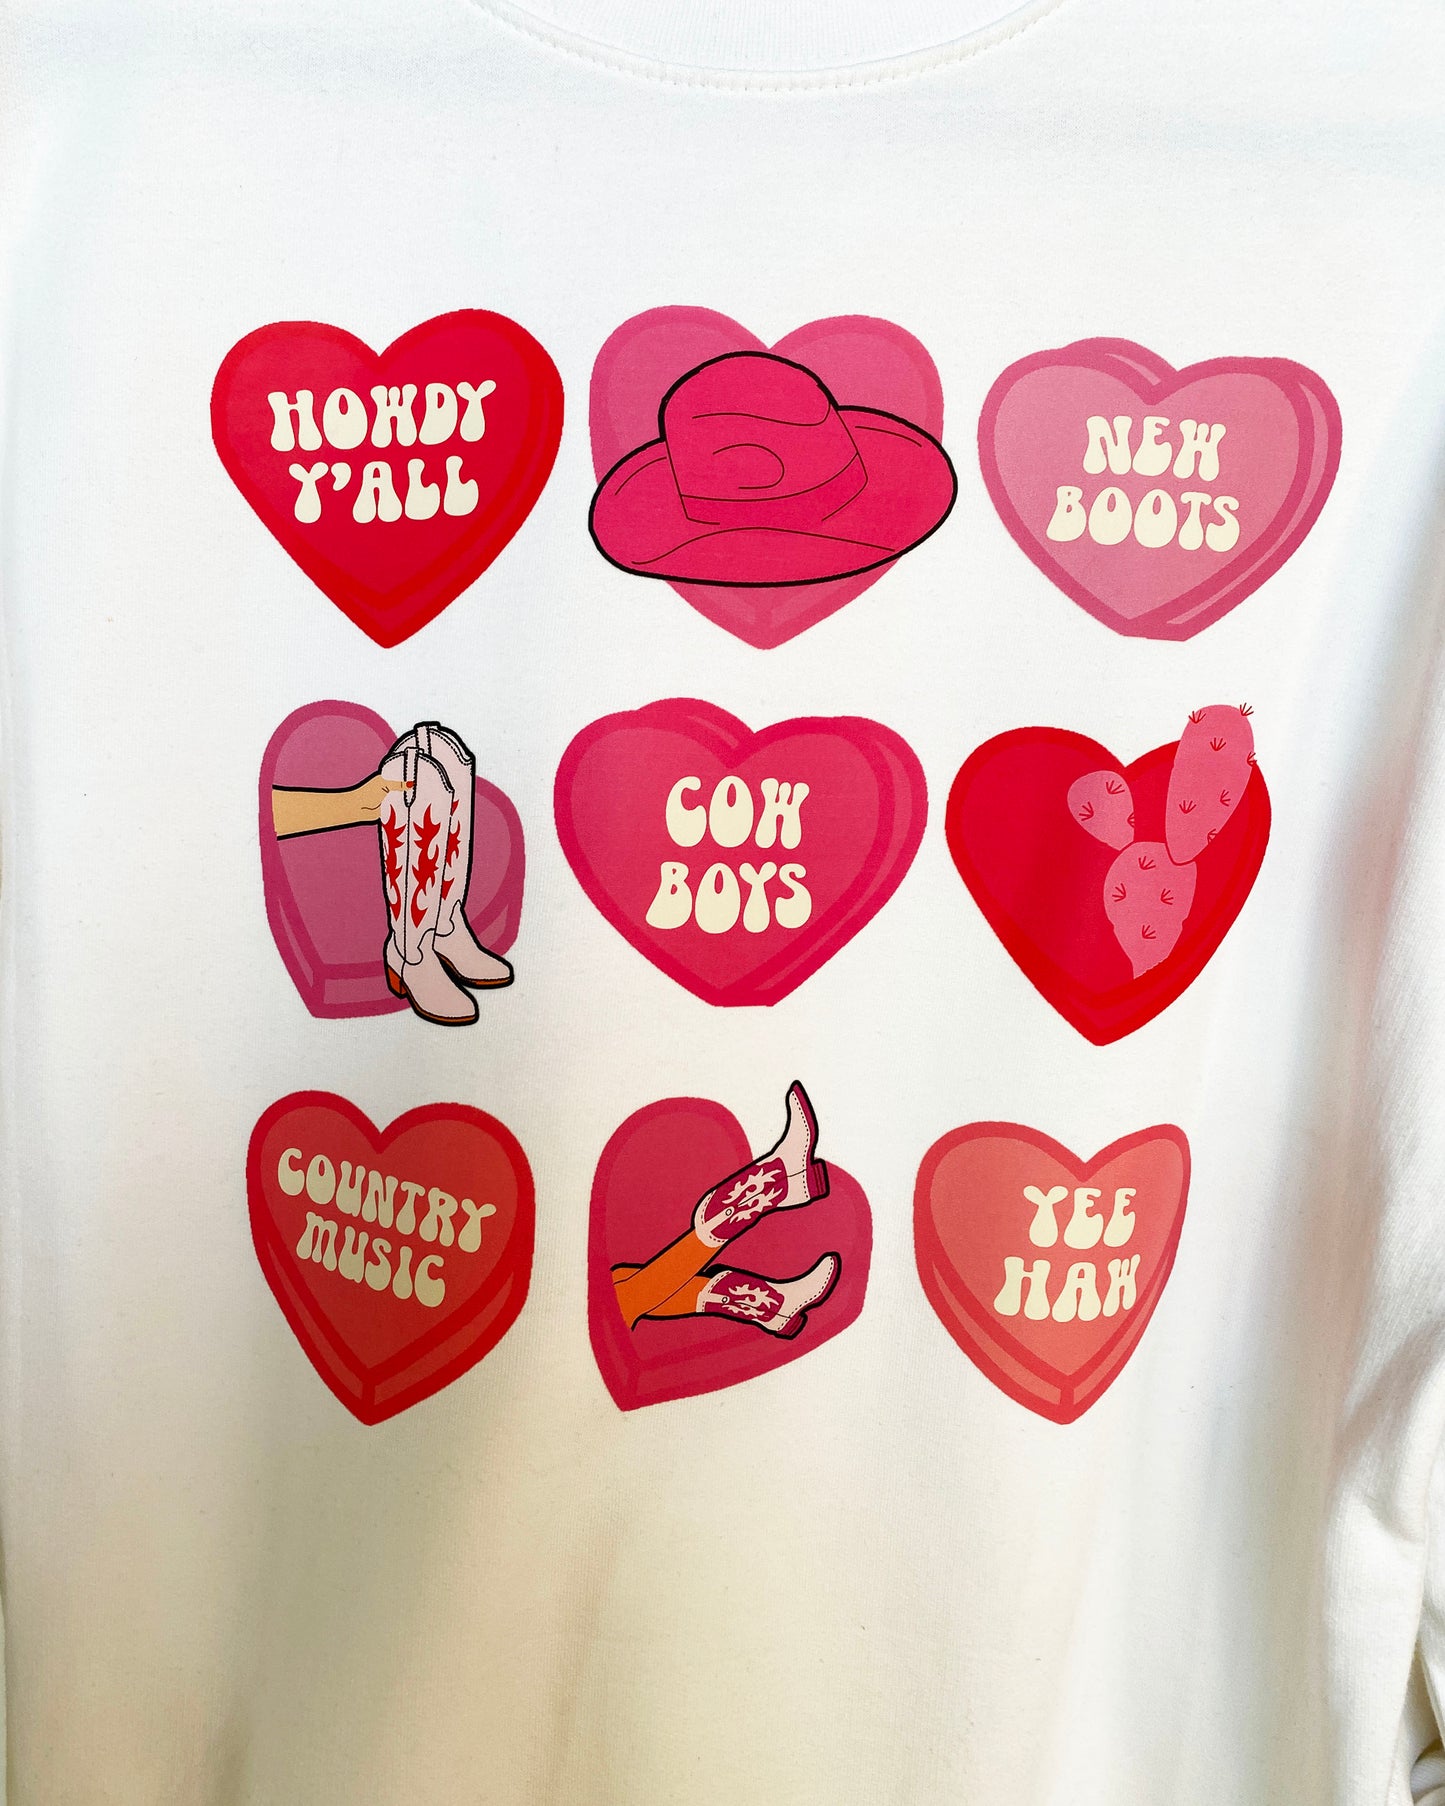 Cowgirl Conversation Hearts Graphic Sweatshirt - White